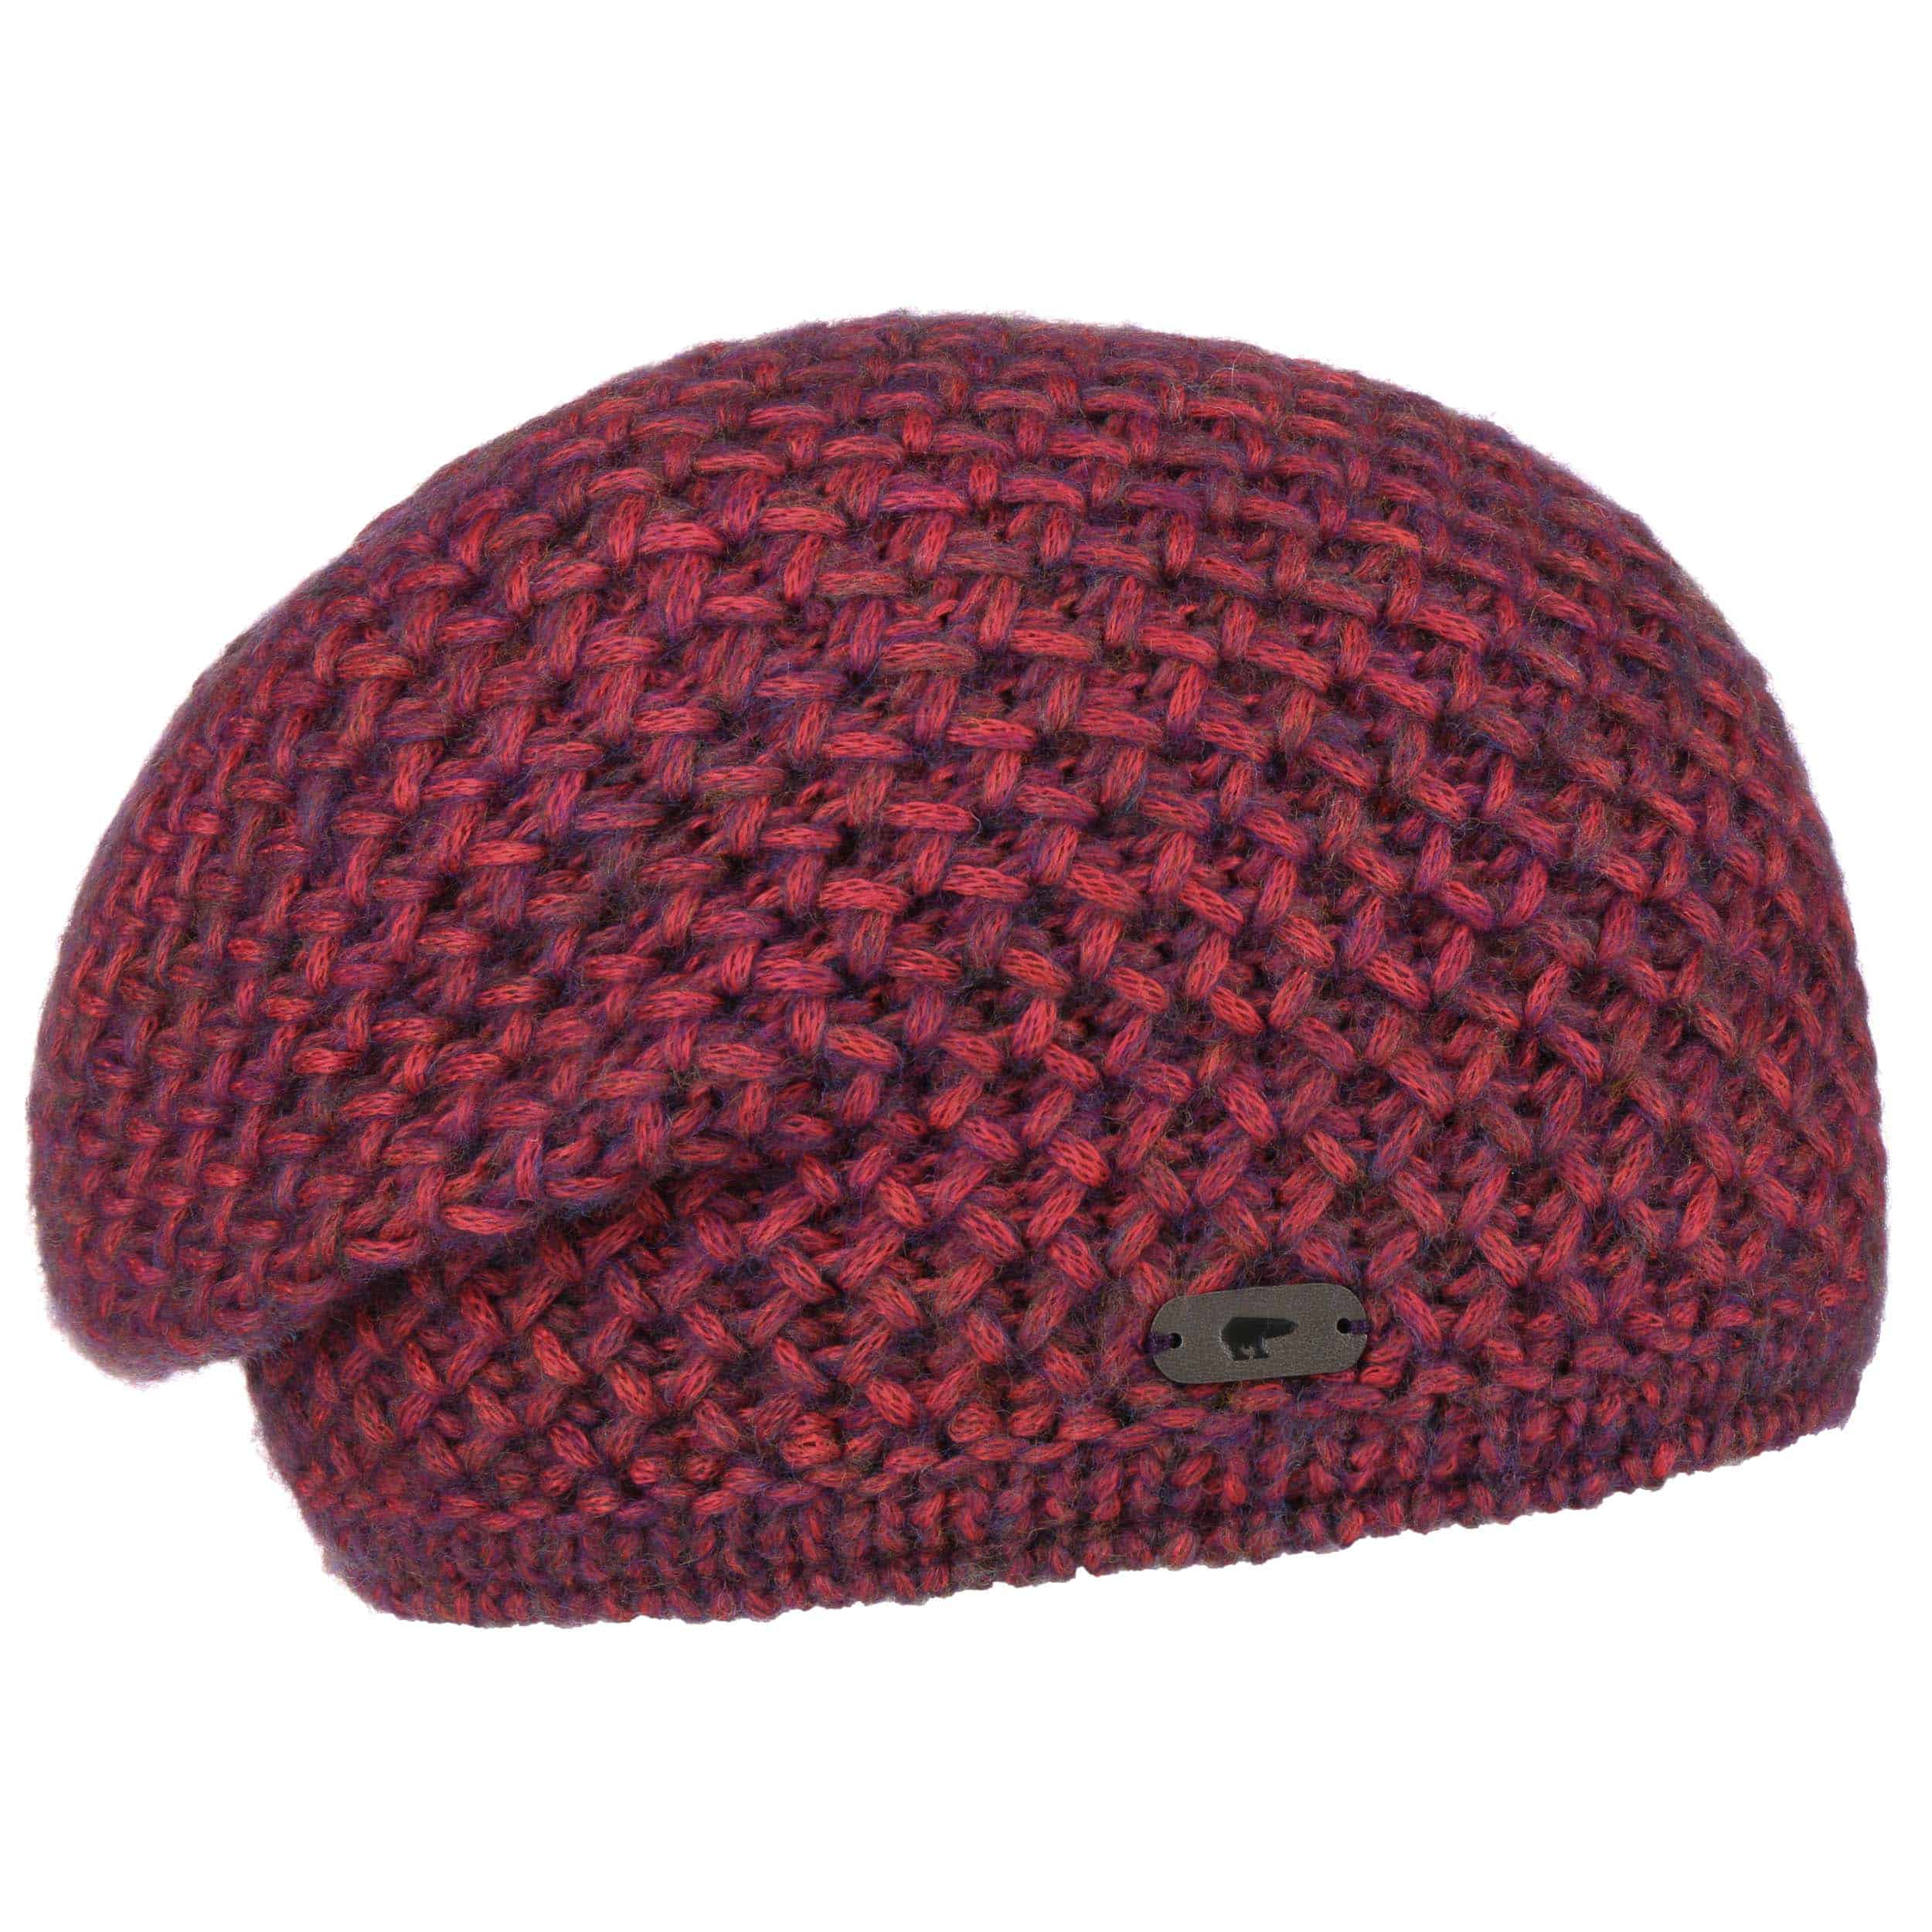 Tulan Knit Beanie by Eisbär - 48,95